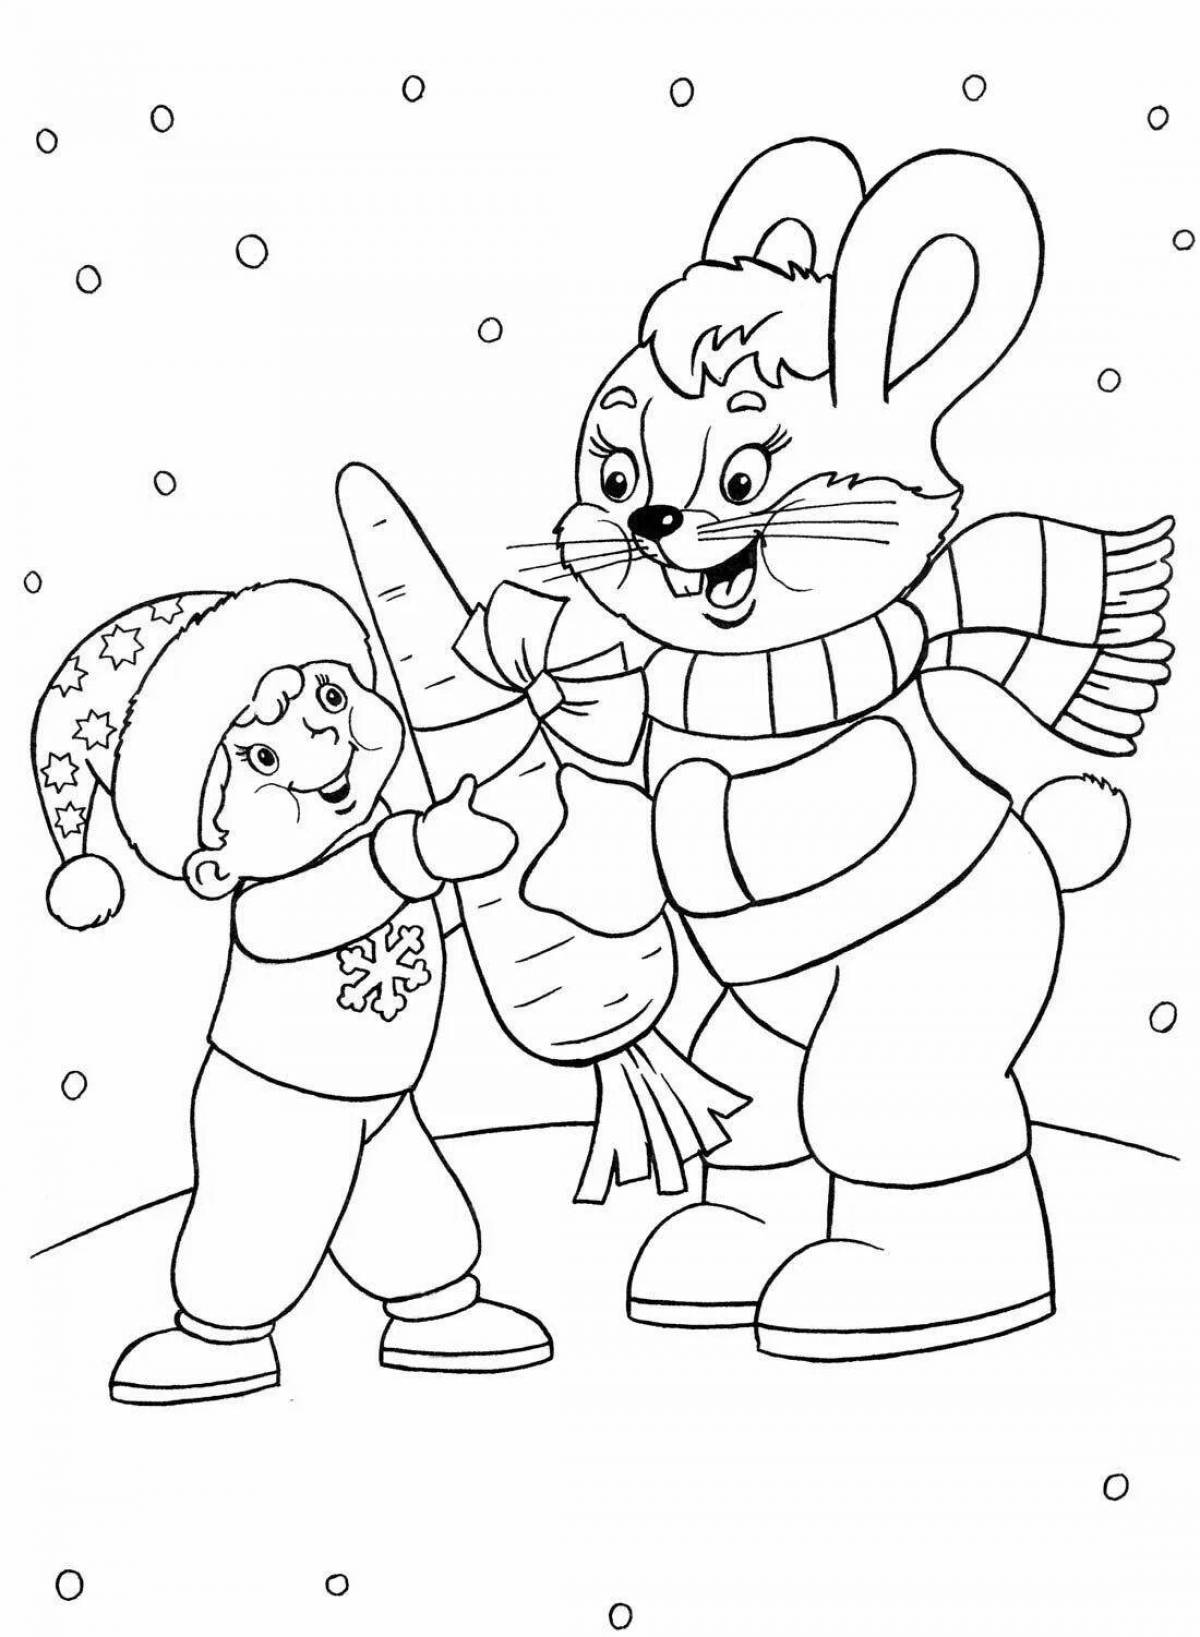 Christmas drawing of a joyful hare